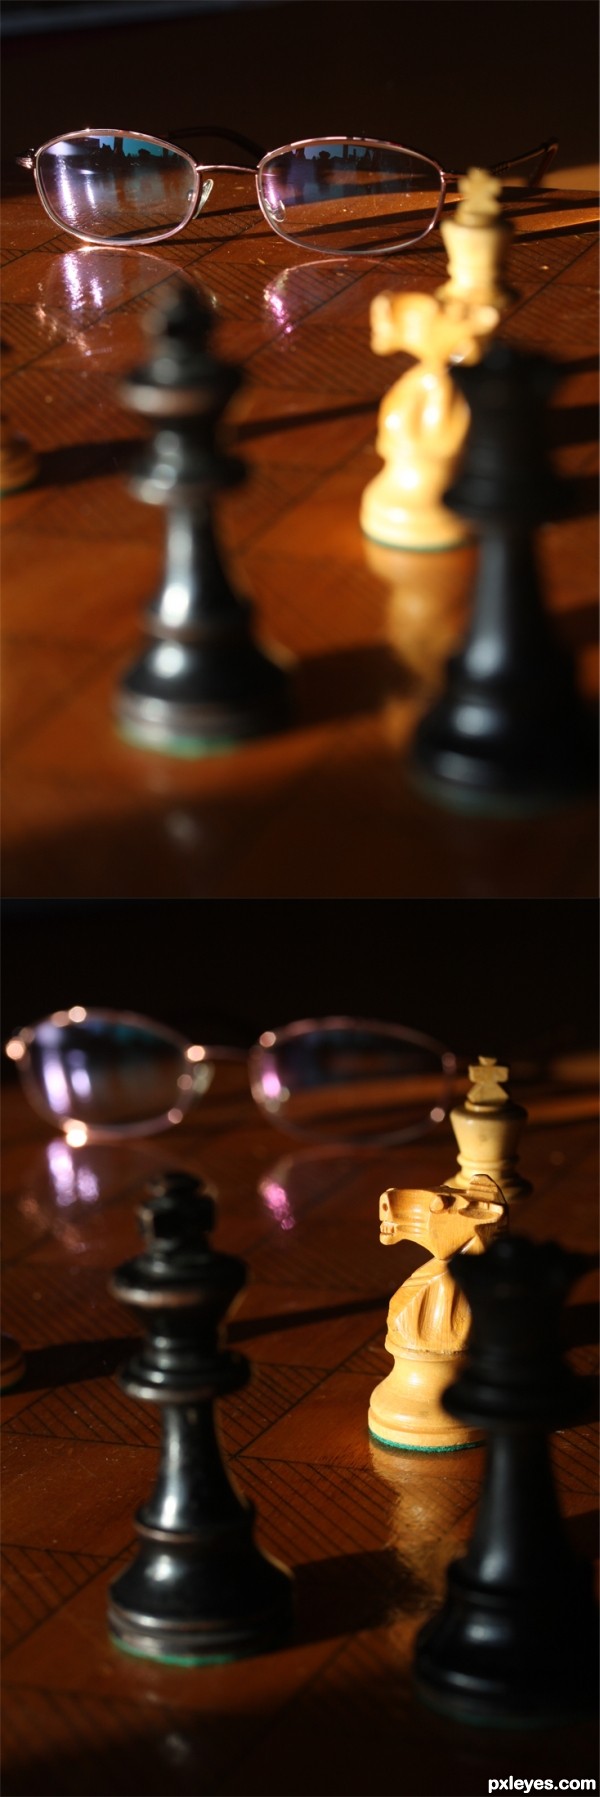 Focus on chess